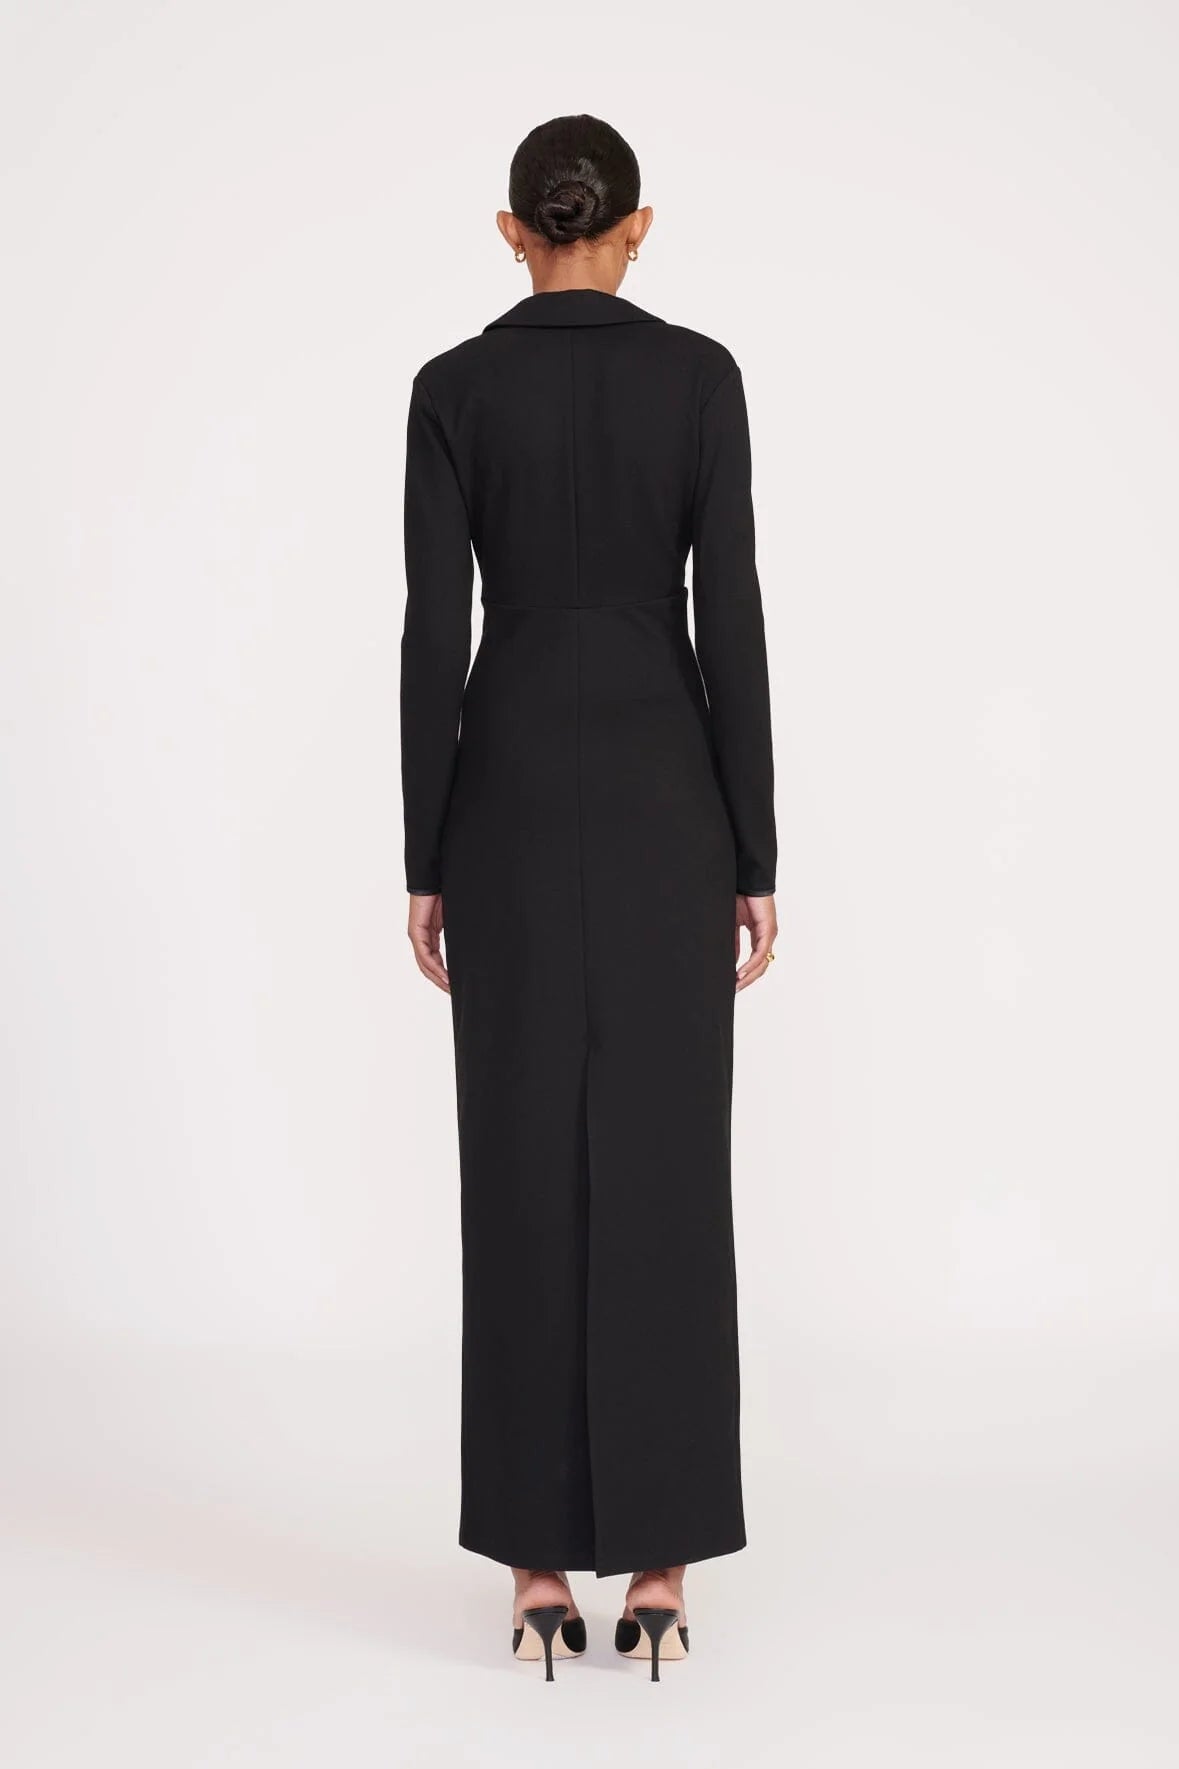 Humbolt dress - Black